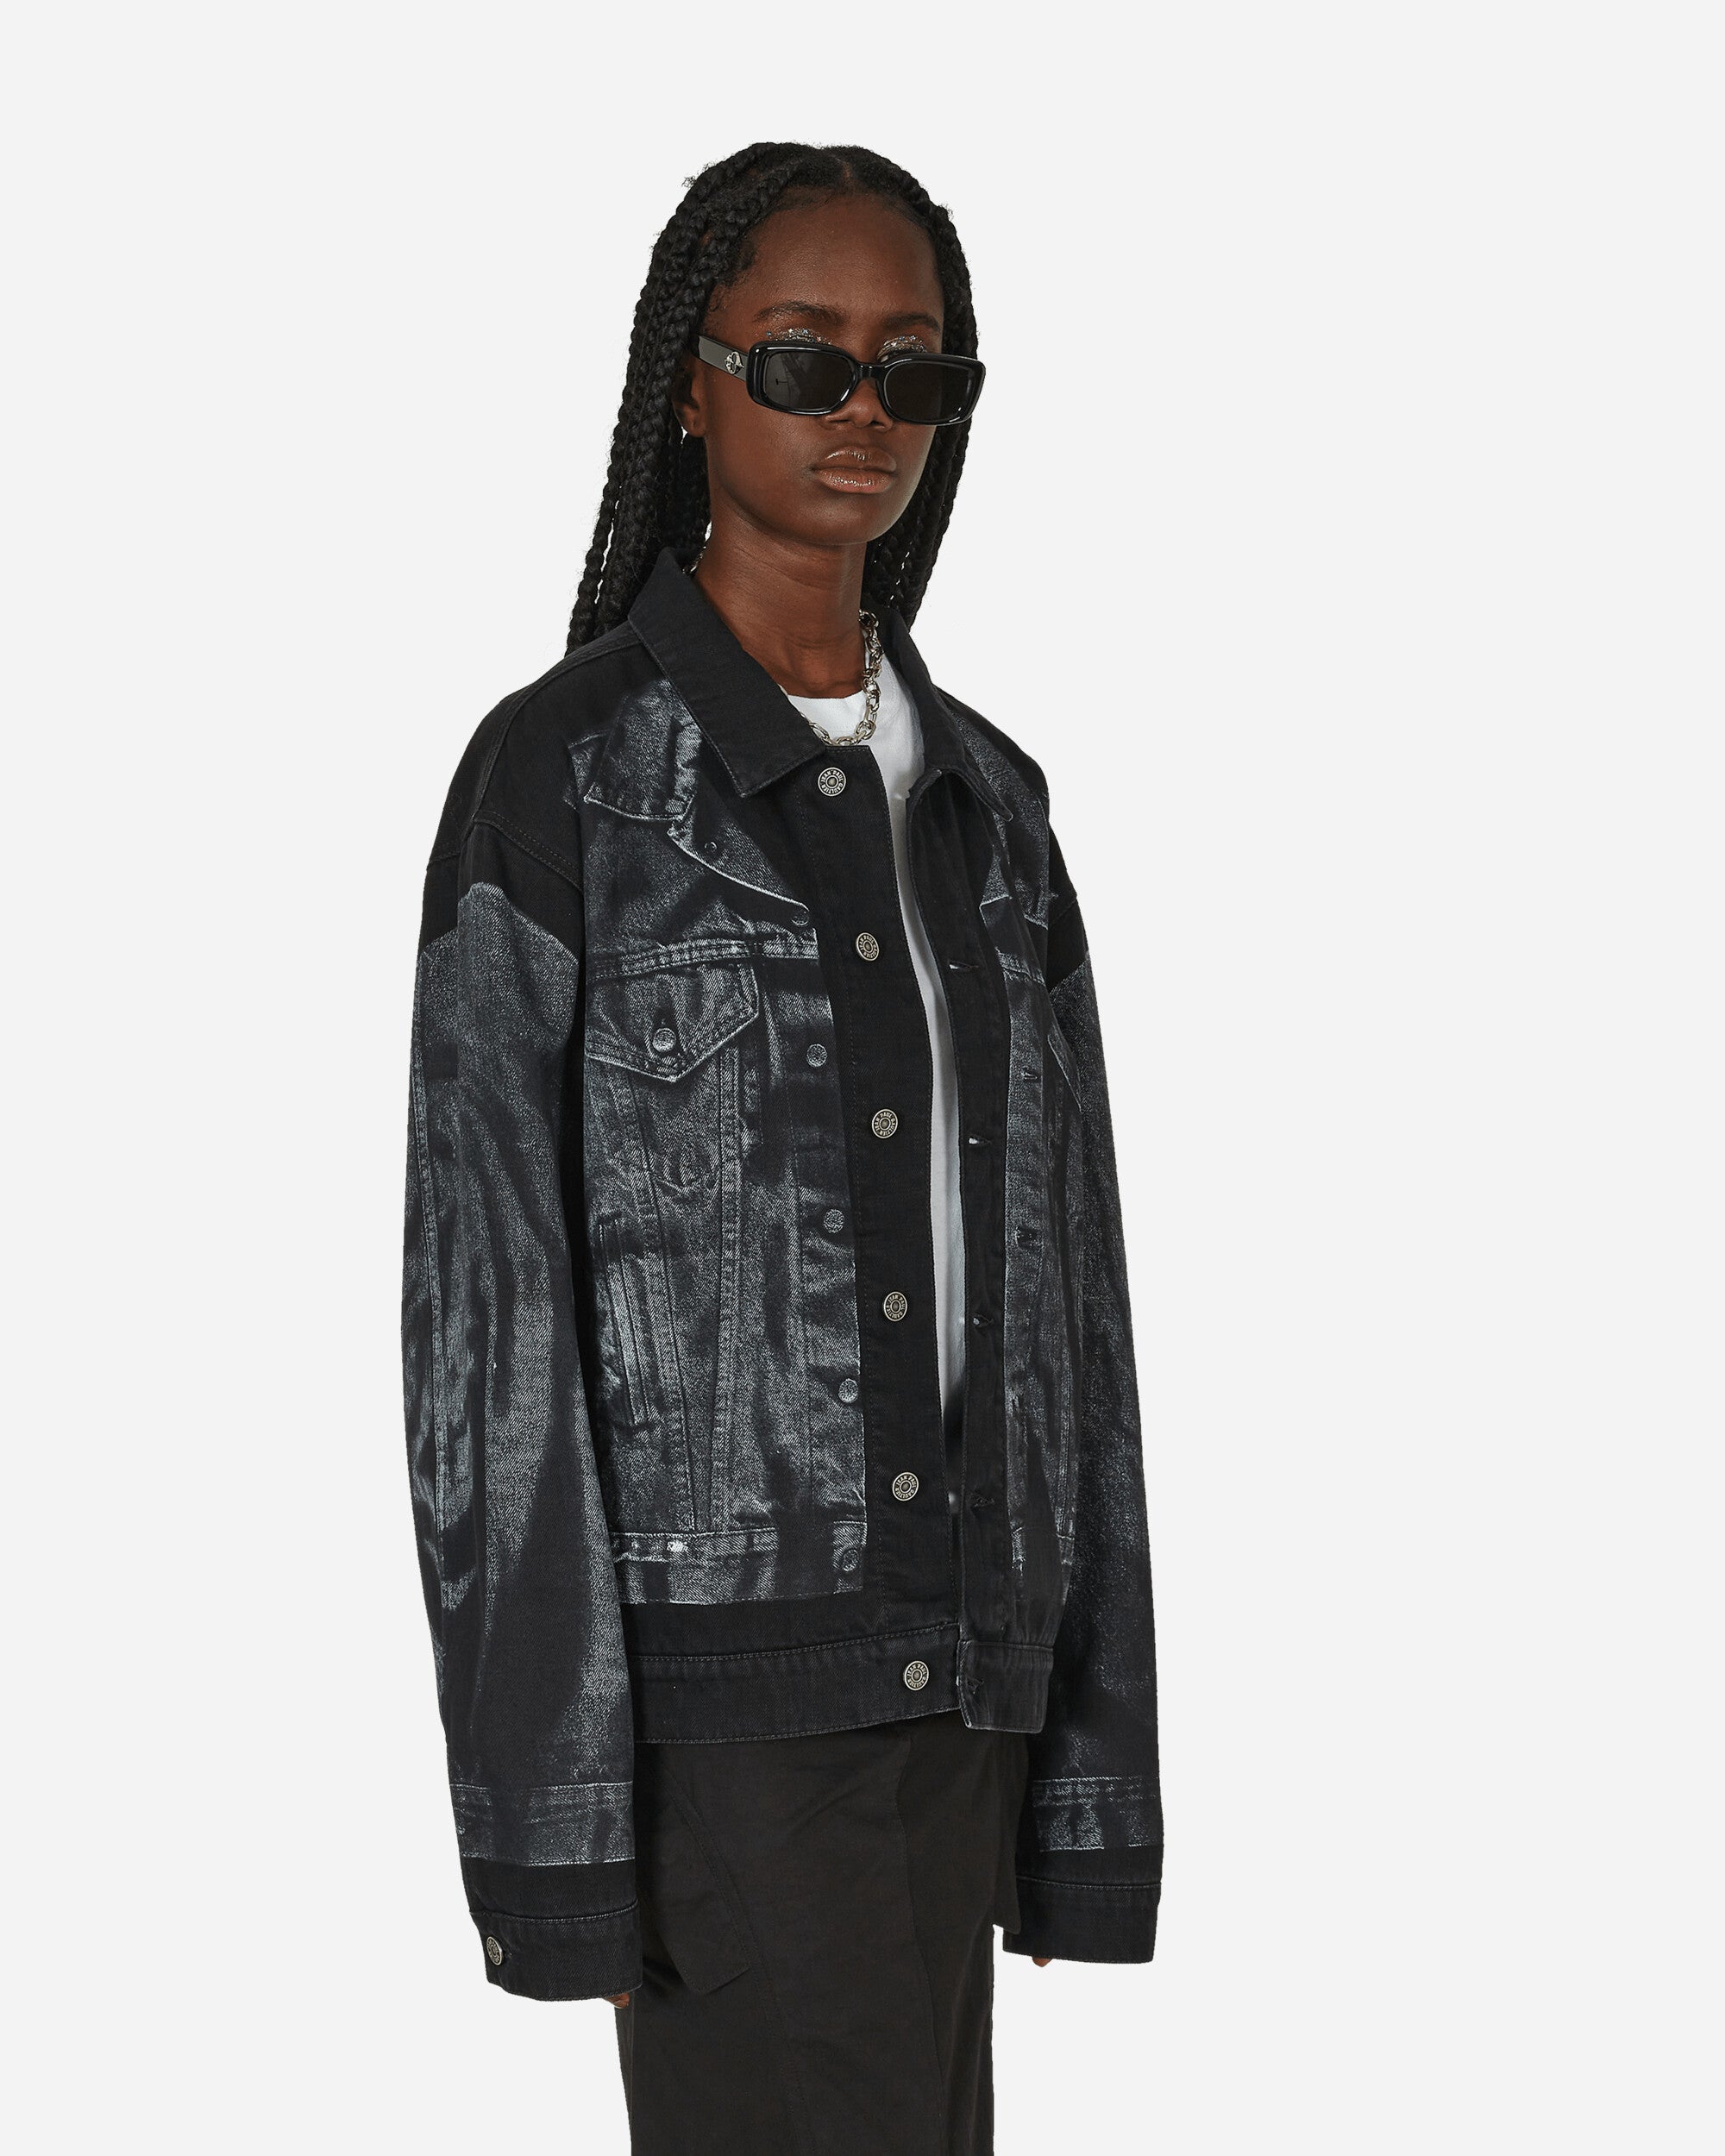 Jean Paul Gaultier Wmns Denim Jacket Printed Trompe L'Oeil Black Coats and Jackets Jackets 2315-U-VE026ILP-D009-00 2